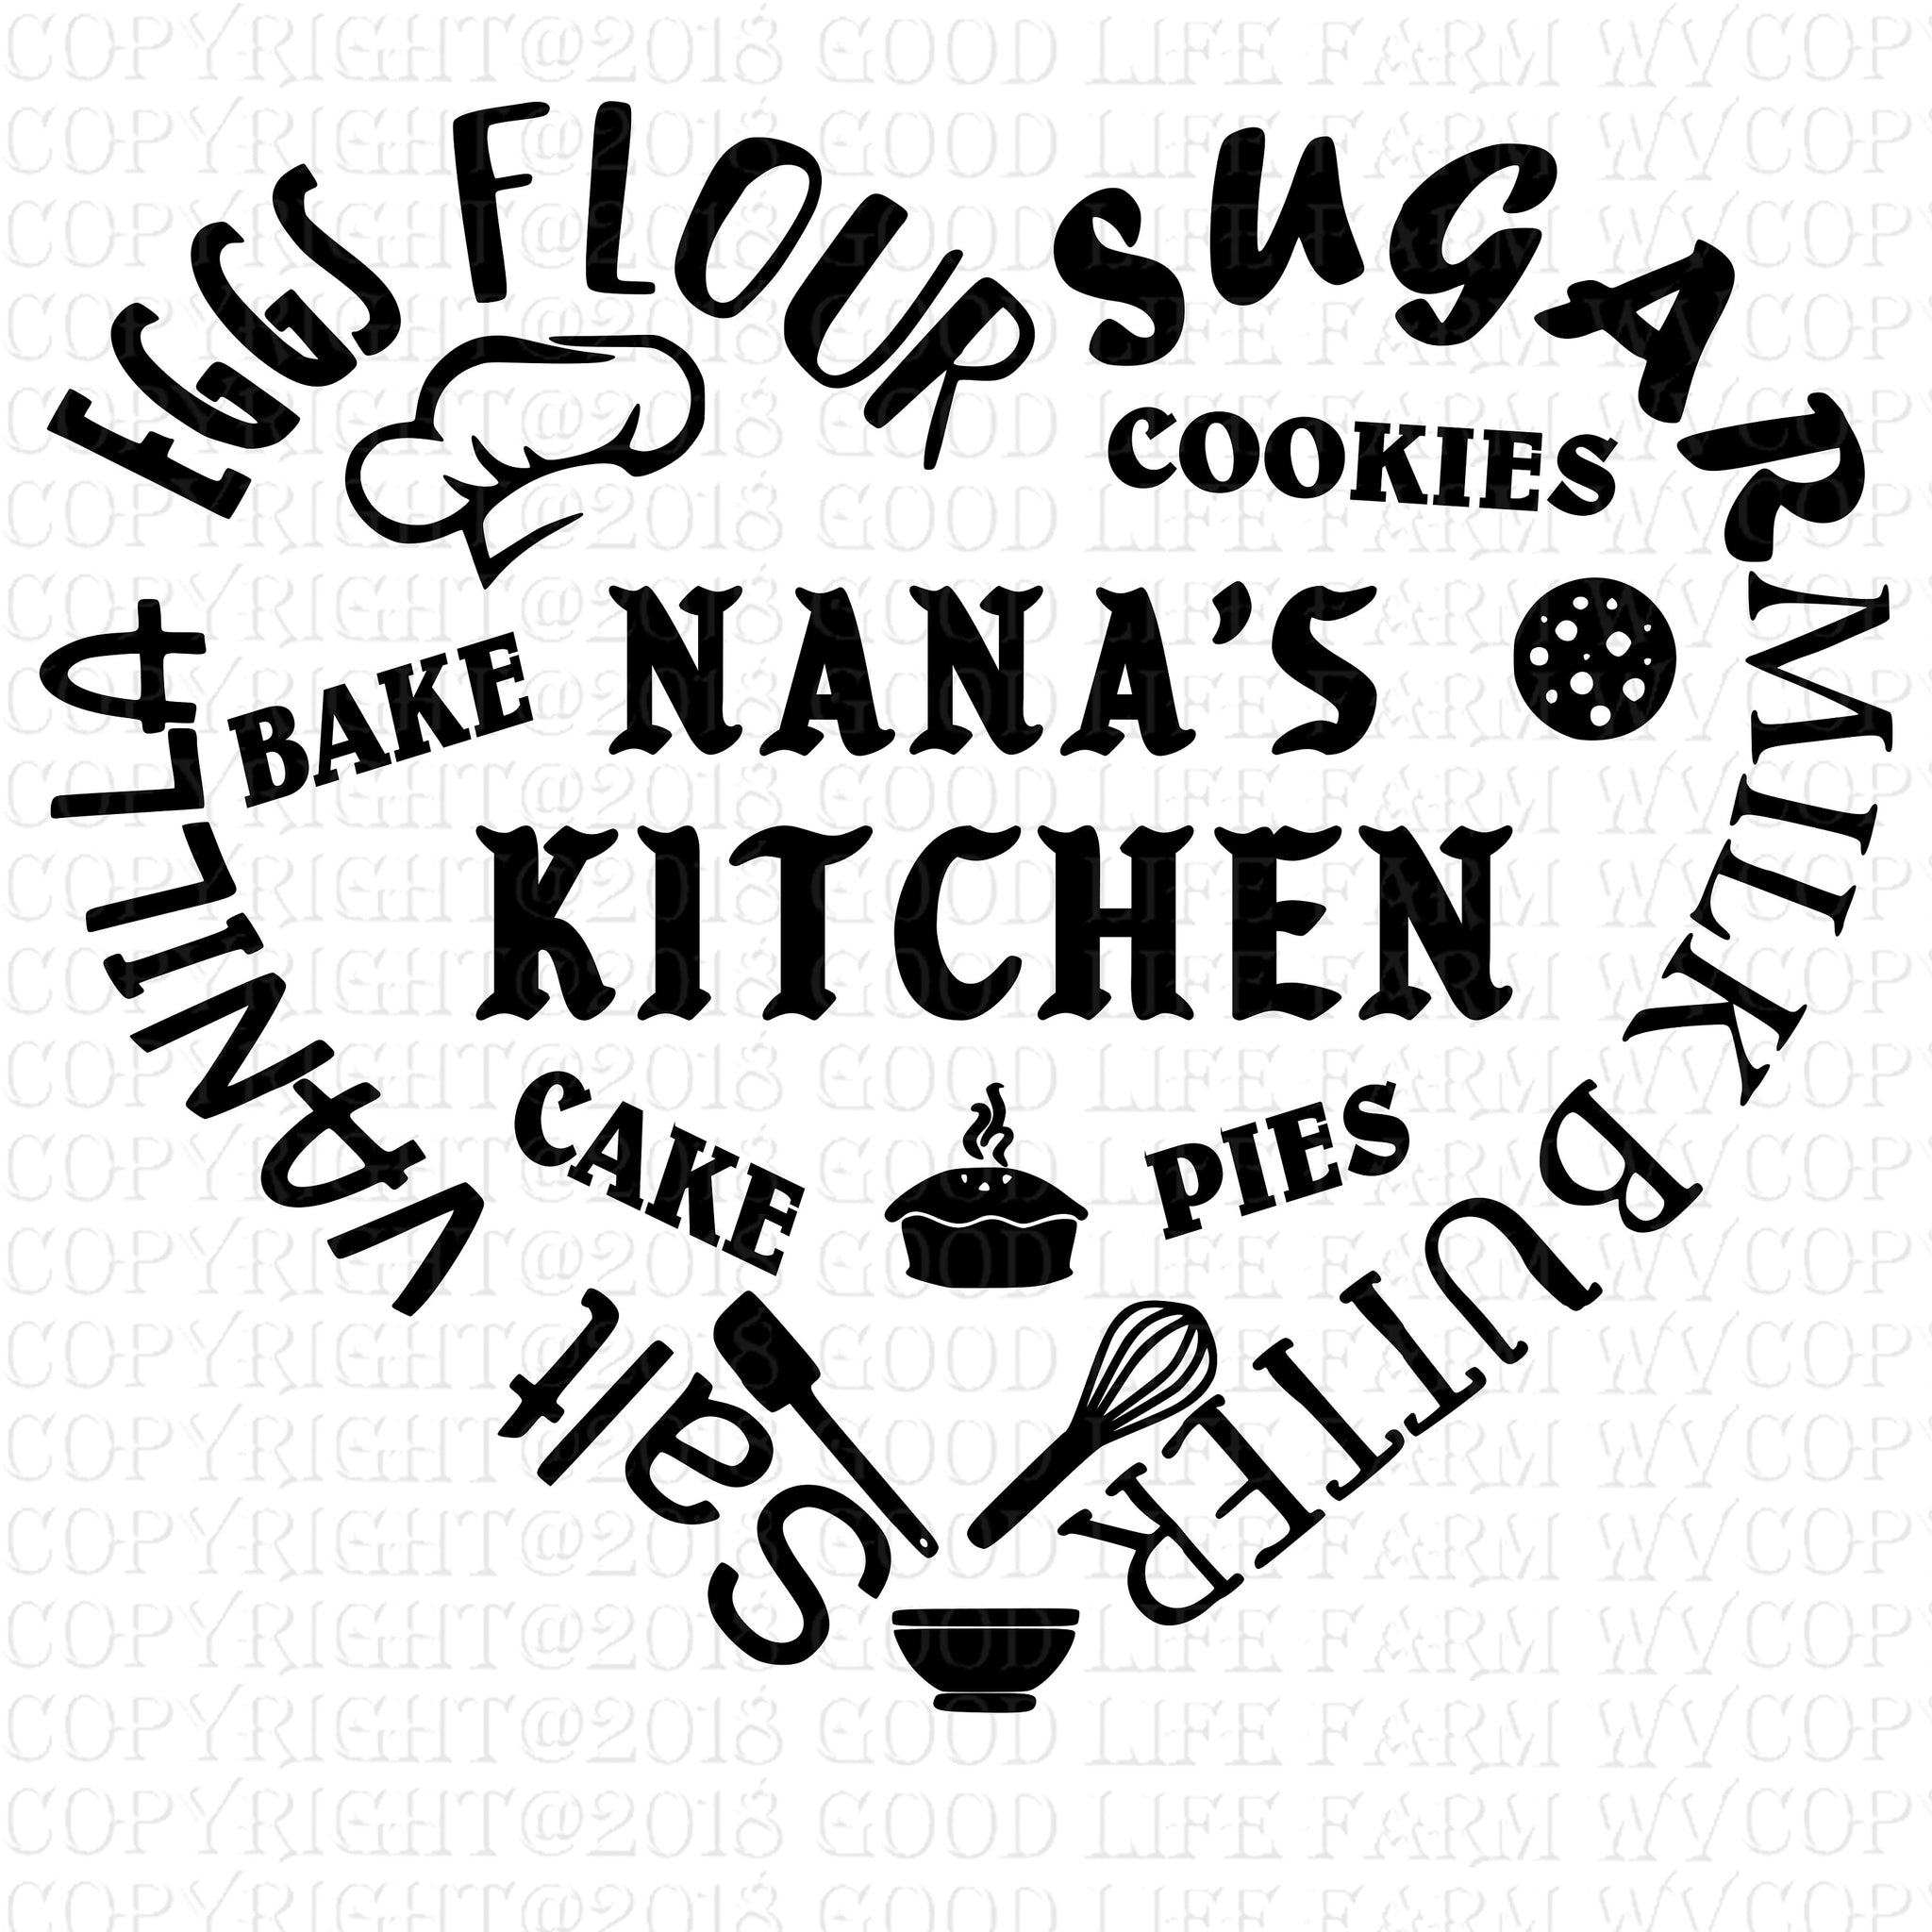 Download Nana S Kitchen Svg Png Jpeg Eps Cutting File Instant Download Good Life Farm Crafts Designs